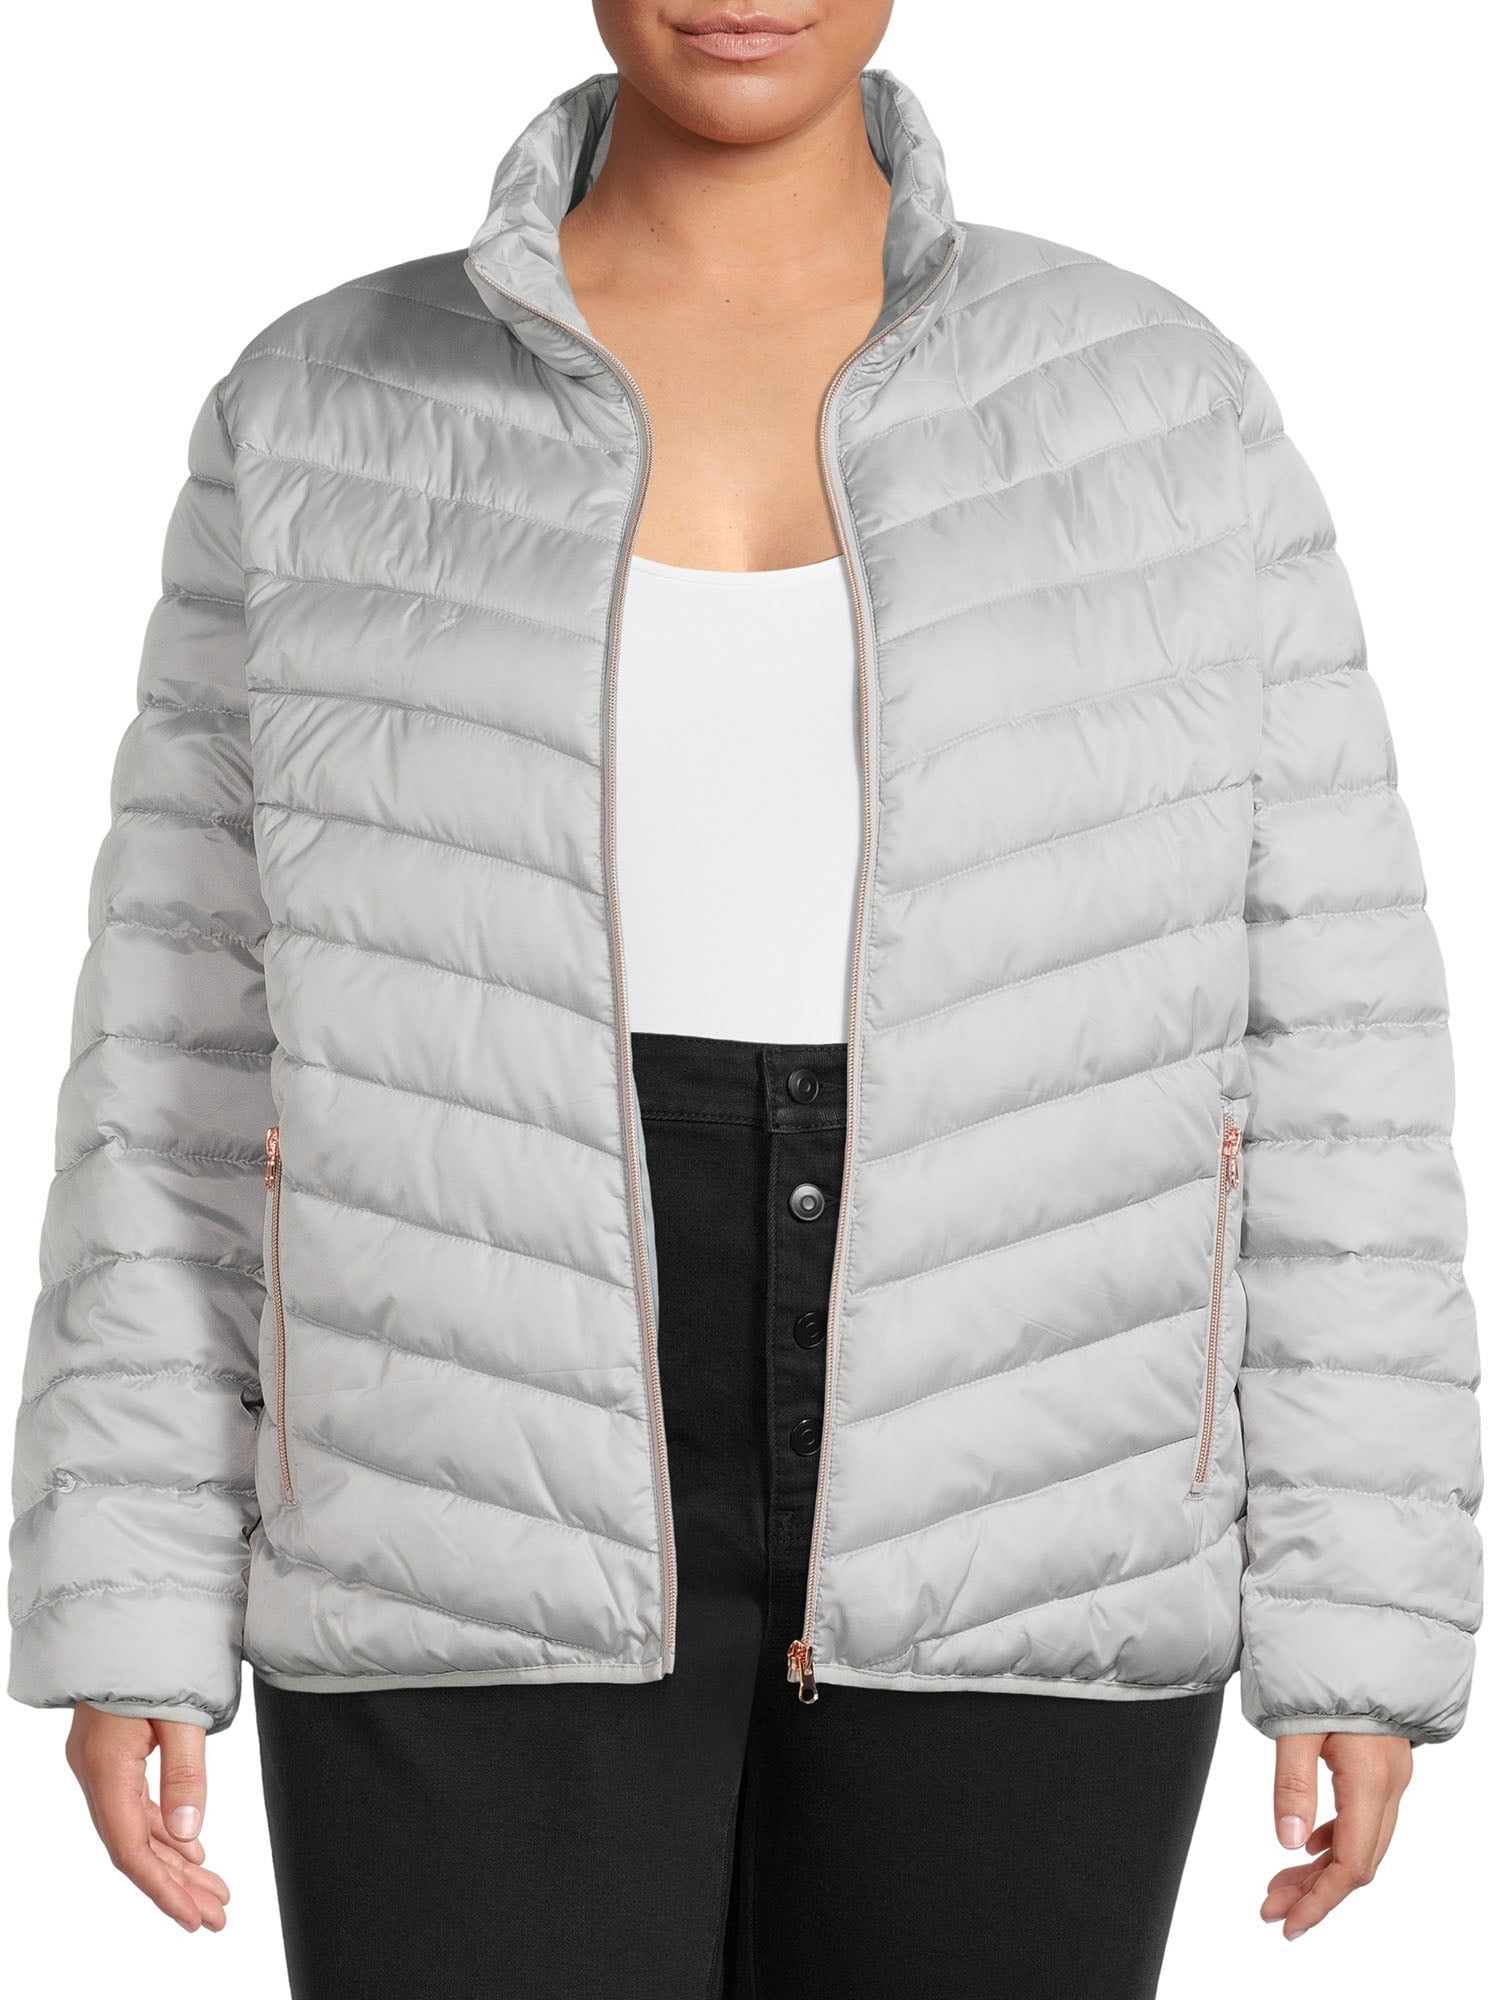 Big Chill Women's Plus Size Puffer Jacket - Walmart.com